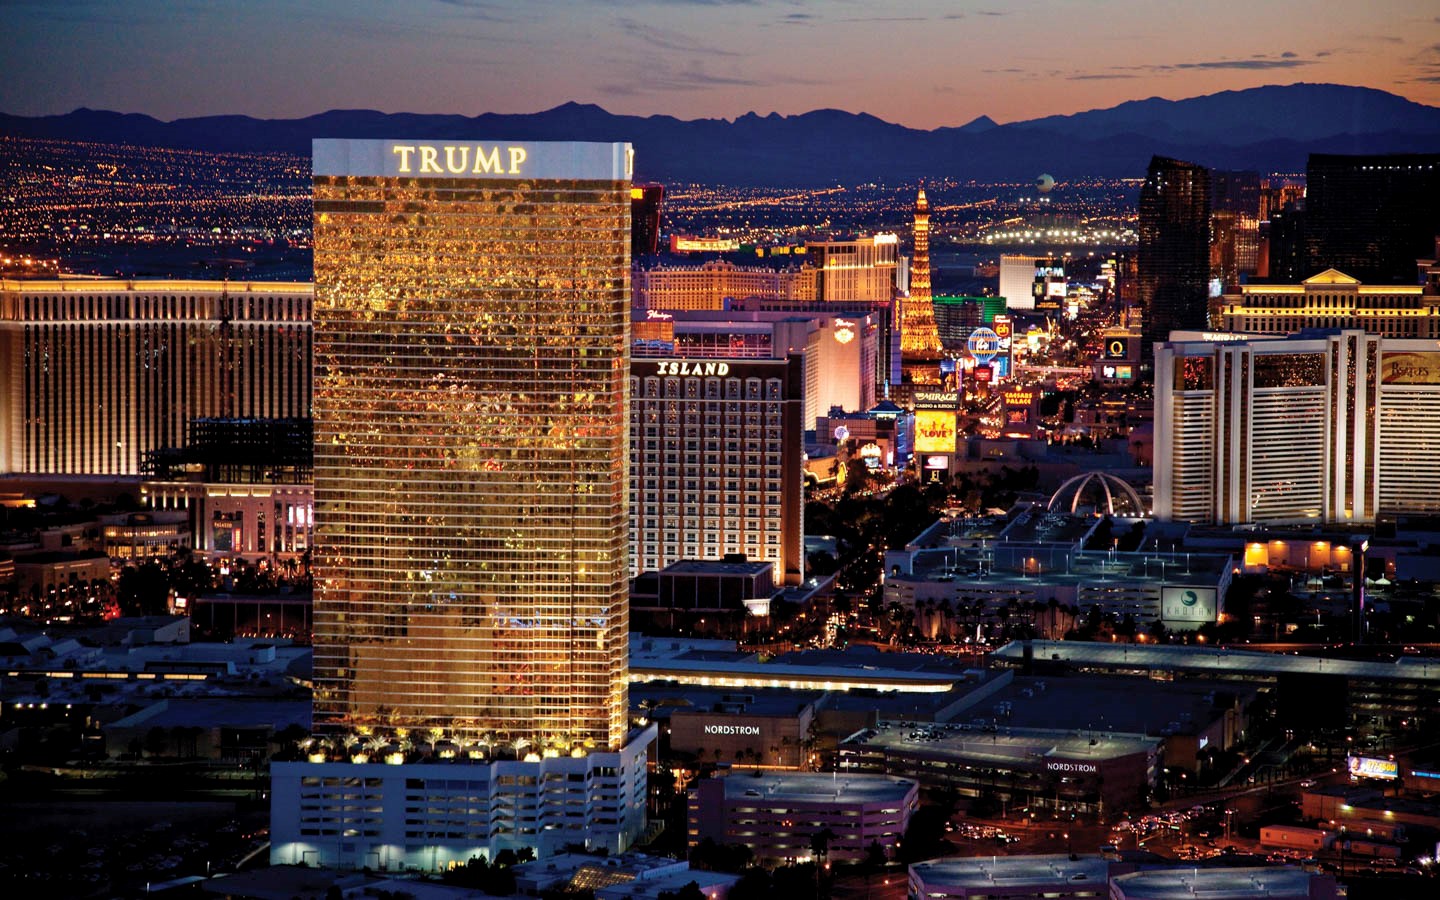 Hilton Trump International Hotel Las Vegas